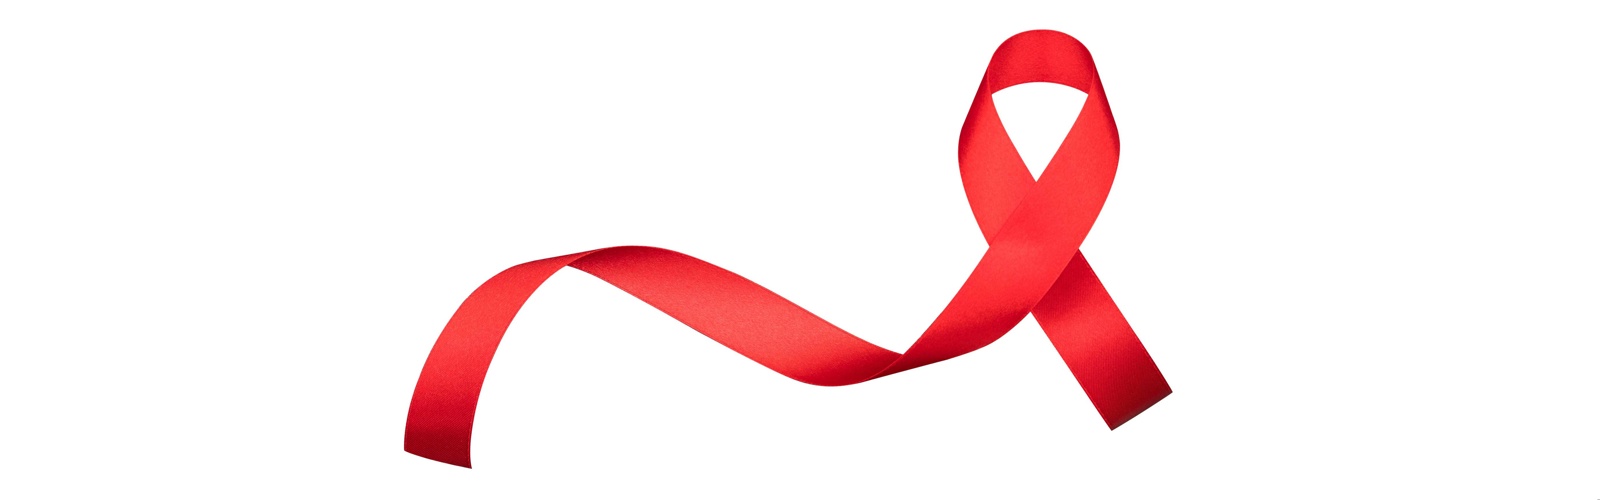 HIV symbol